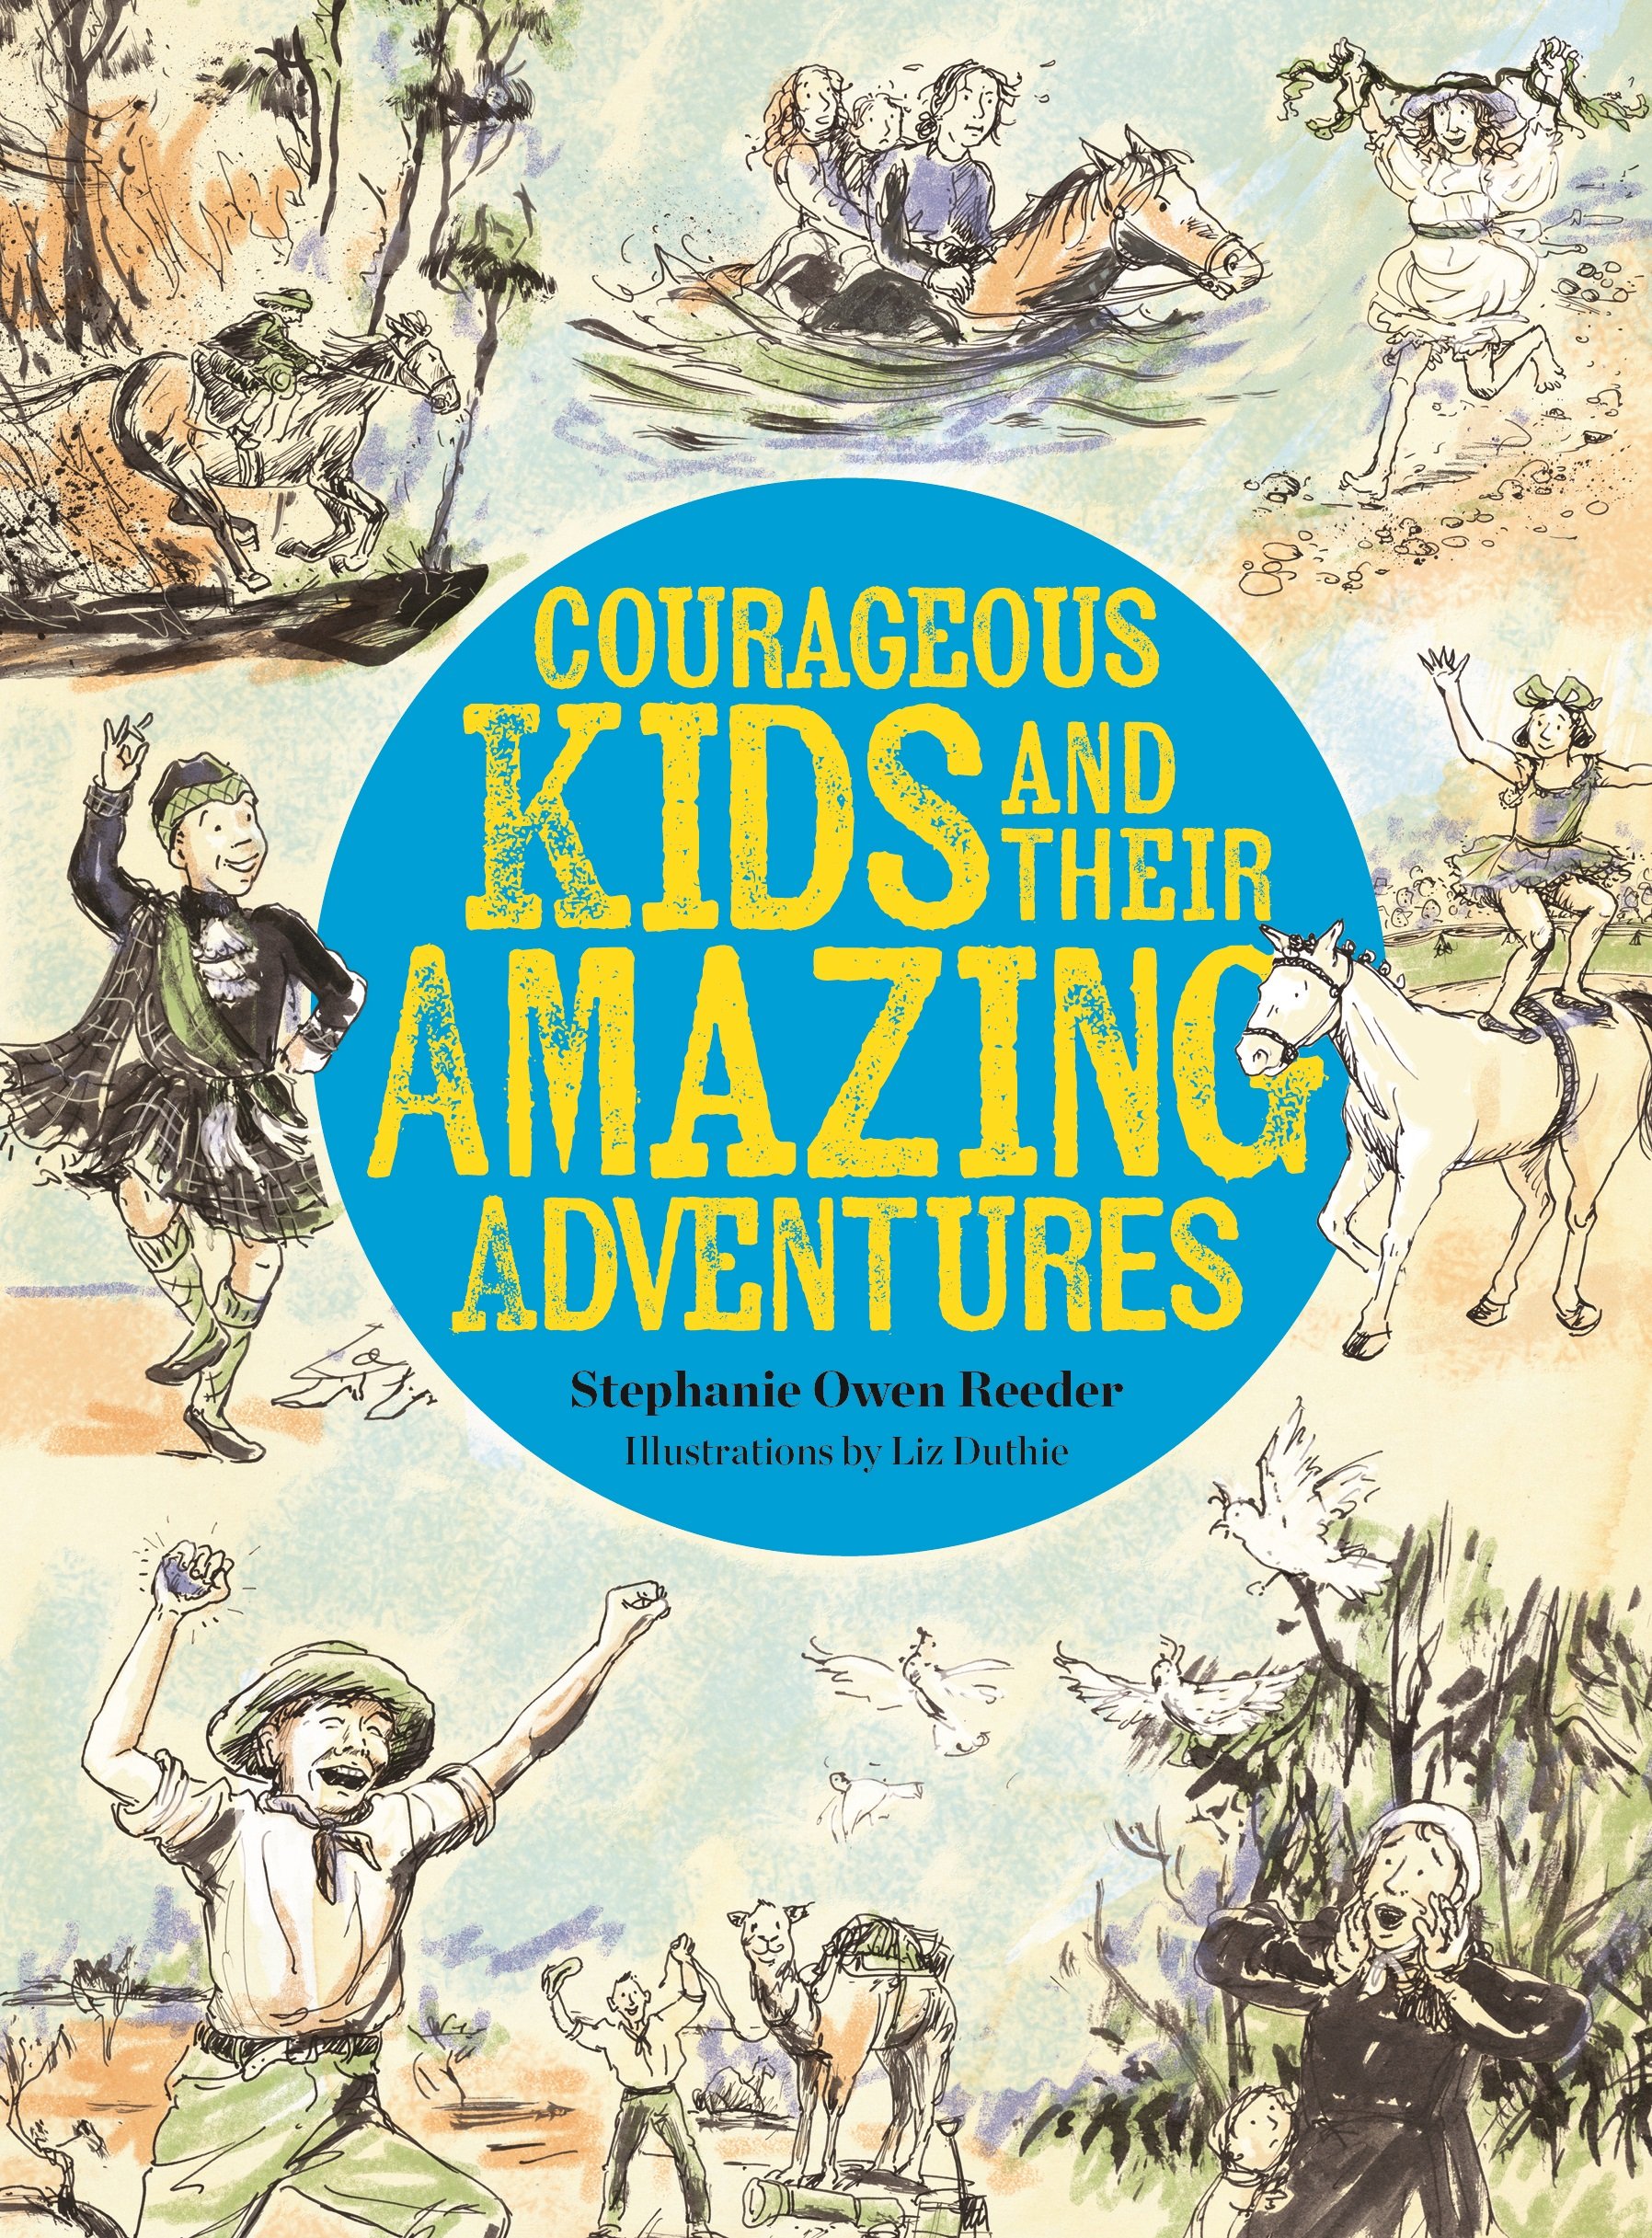 Courageous kids and their Amazing Adventures, Stephanie Owen Reeder and Liz Duthie